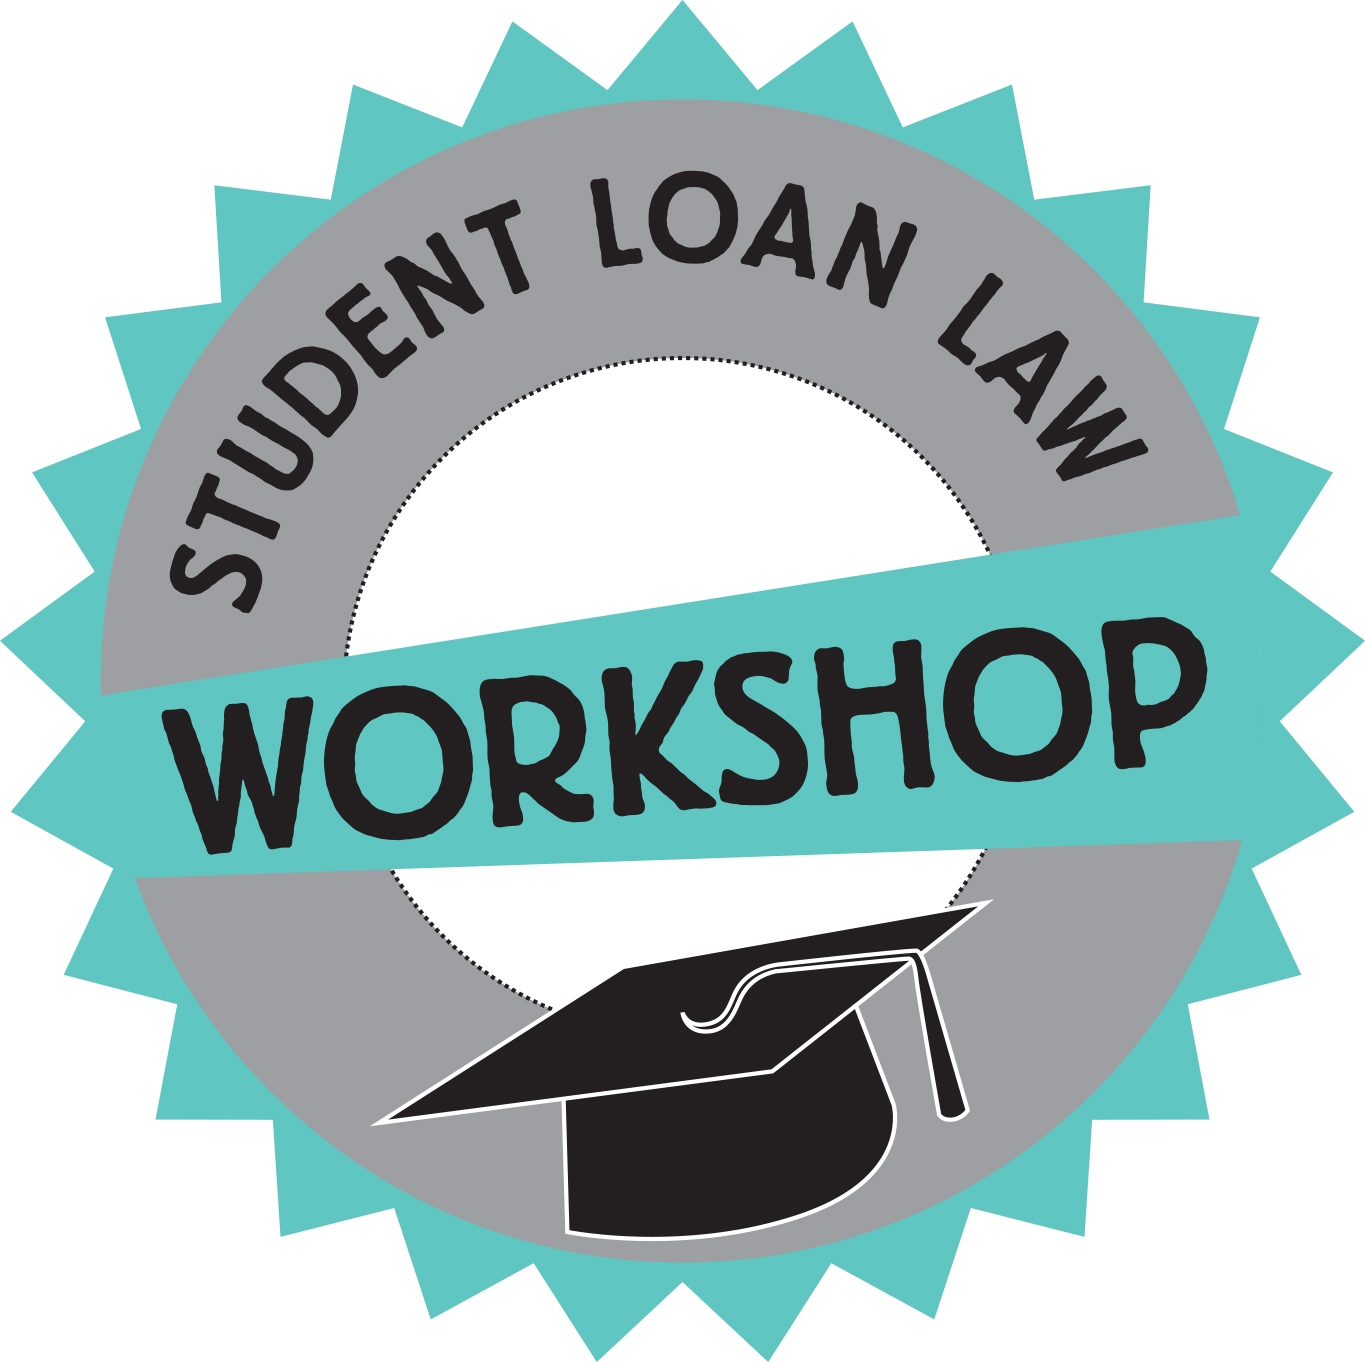 Student Loan Law Workshop